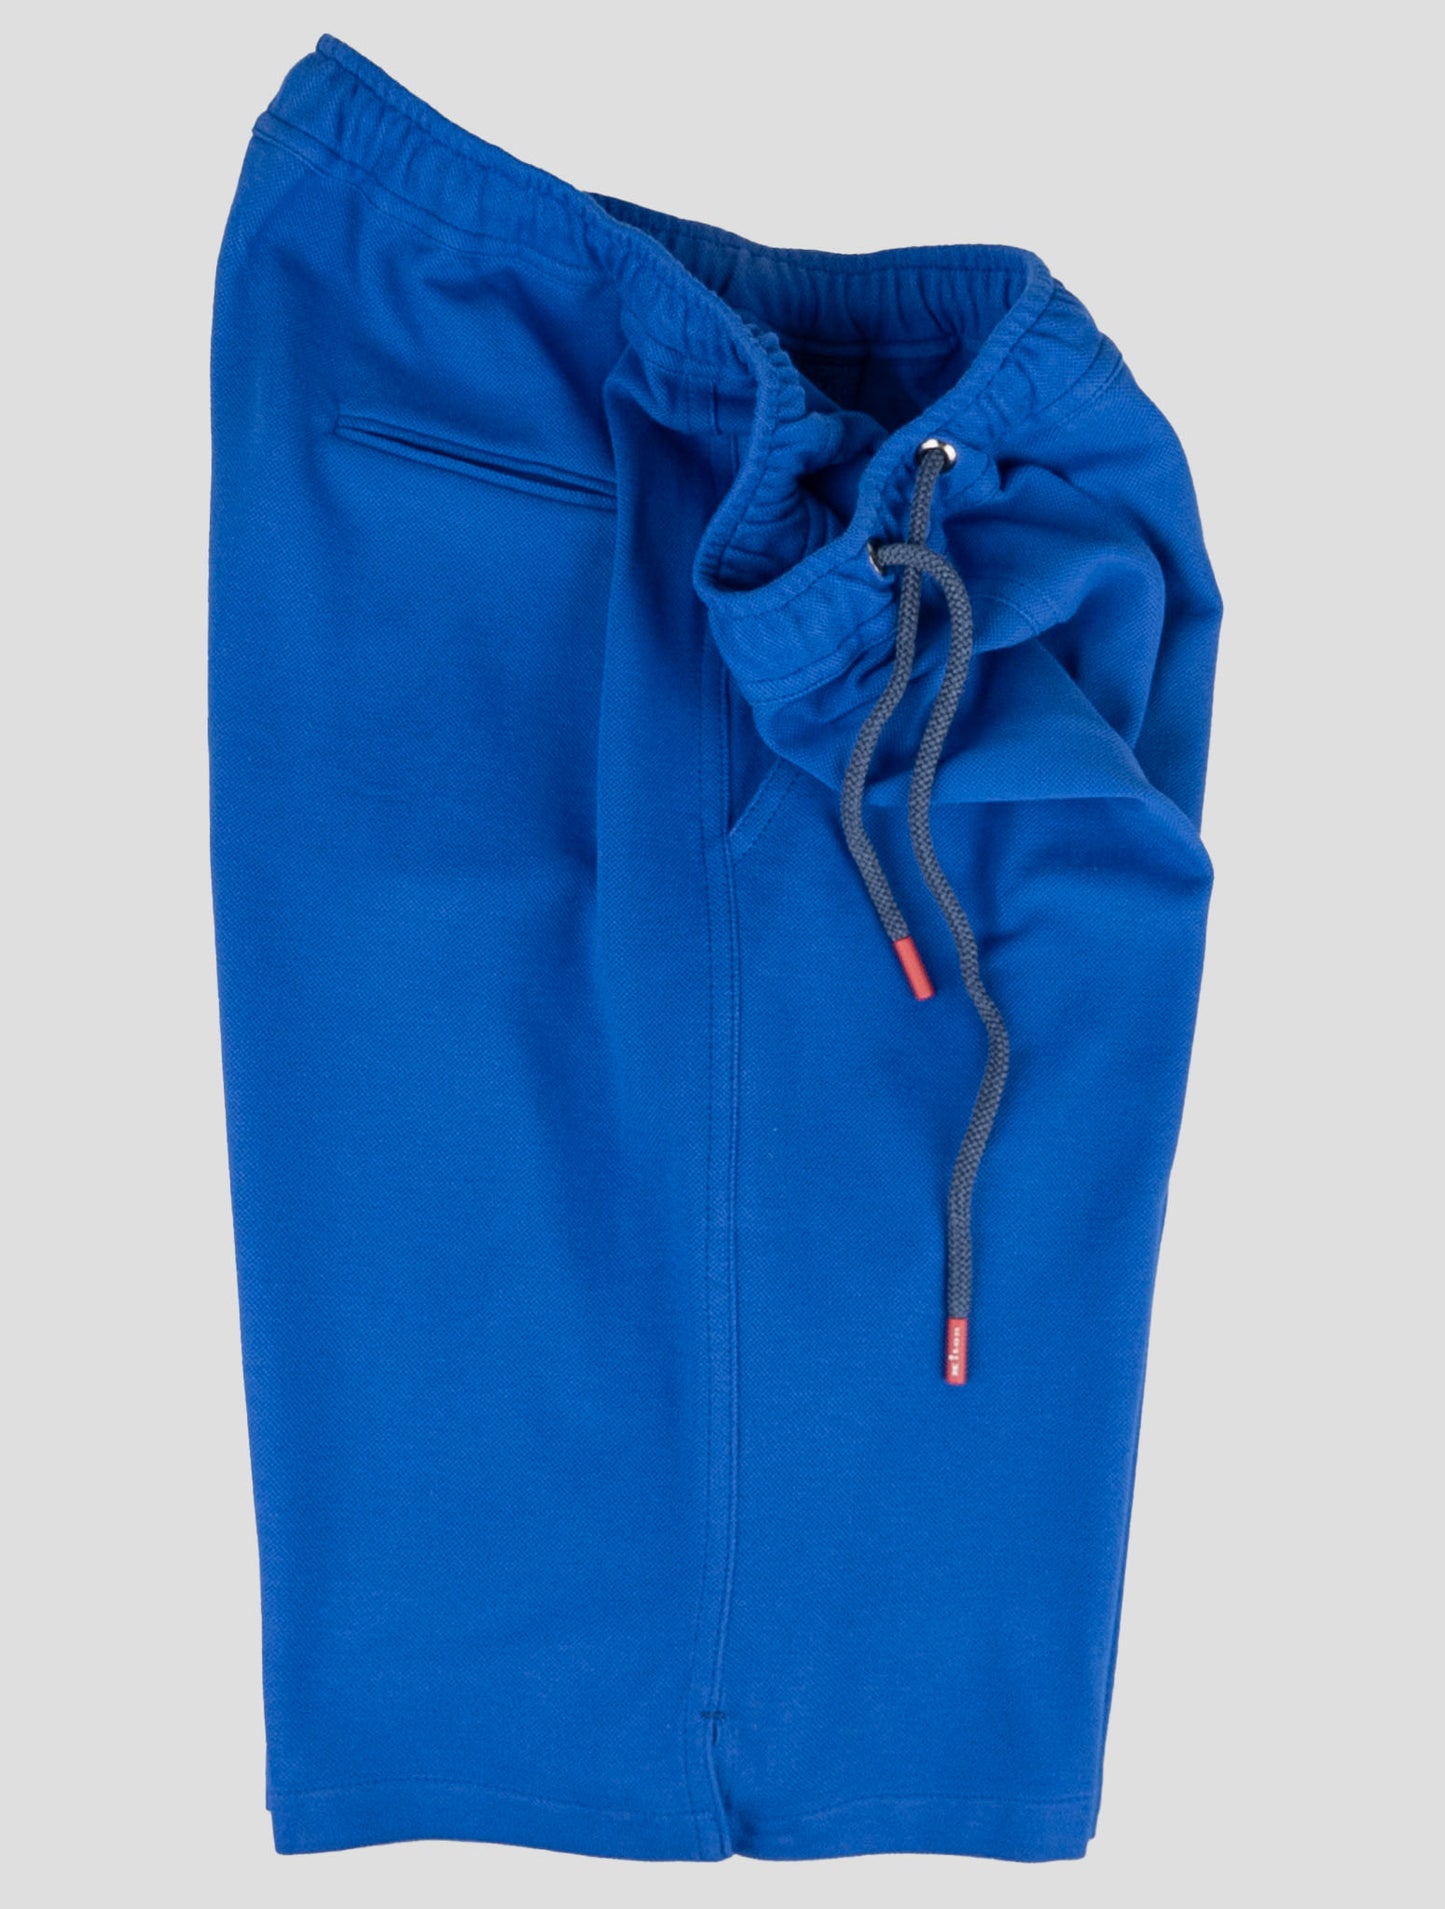 Kiton Matching Outfit-Schwarze Umbi und blaue Kurzhose Trainings anzug